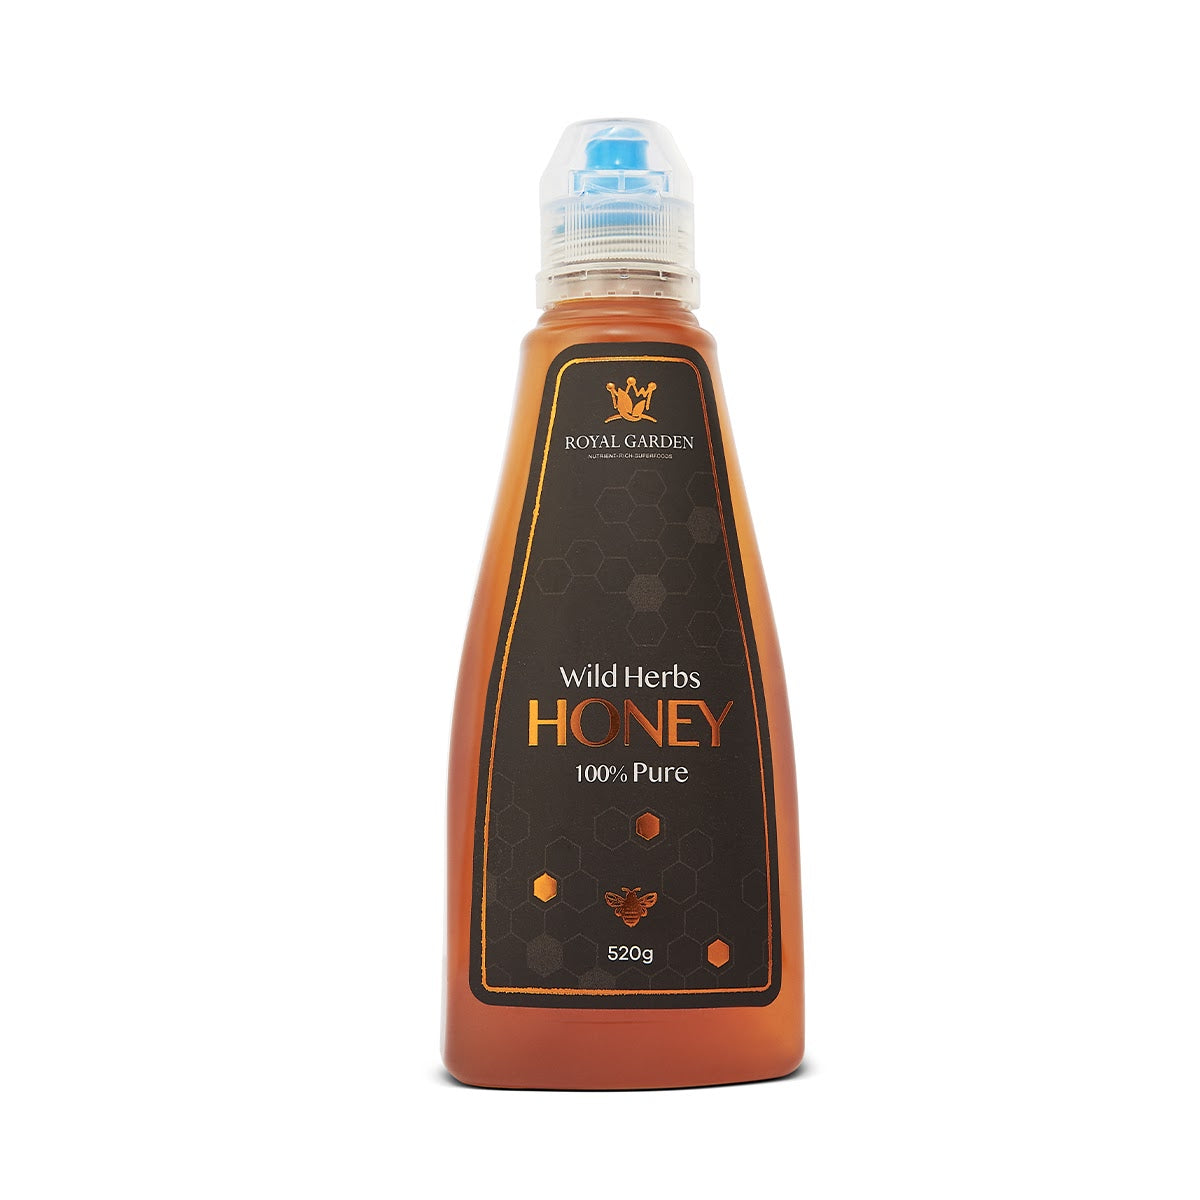 Wild herbs honey